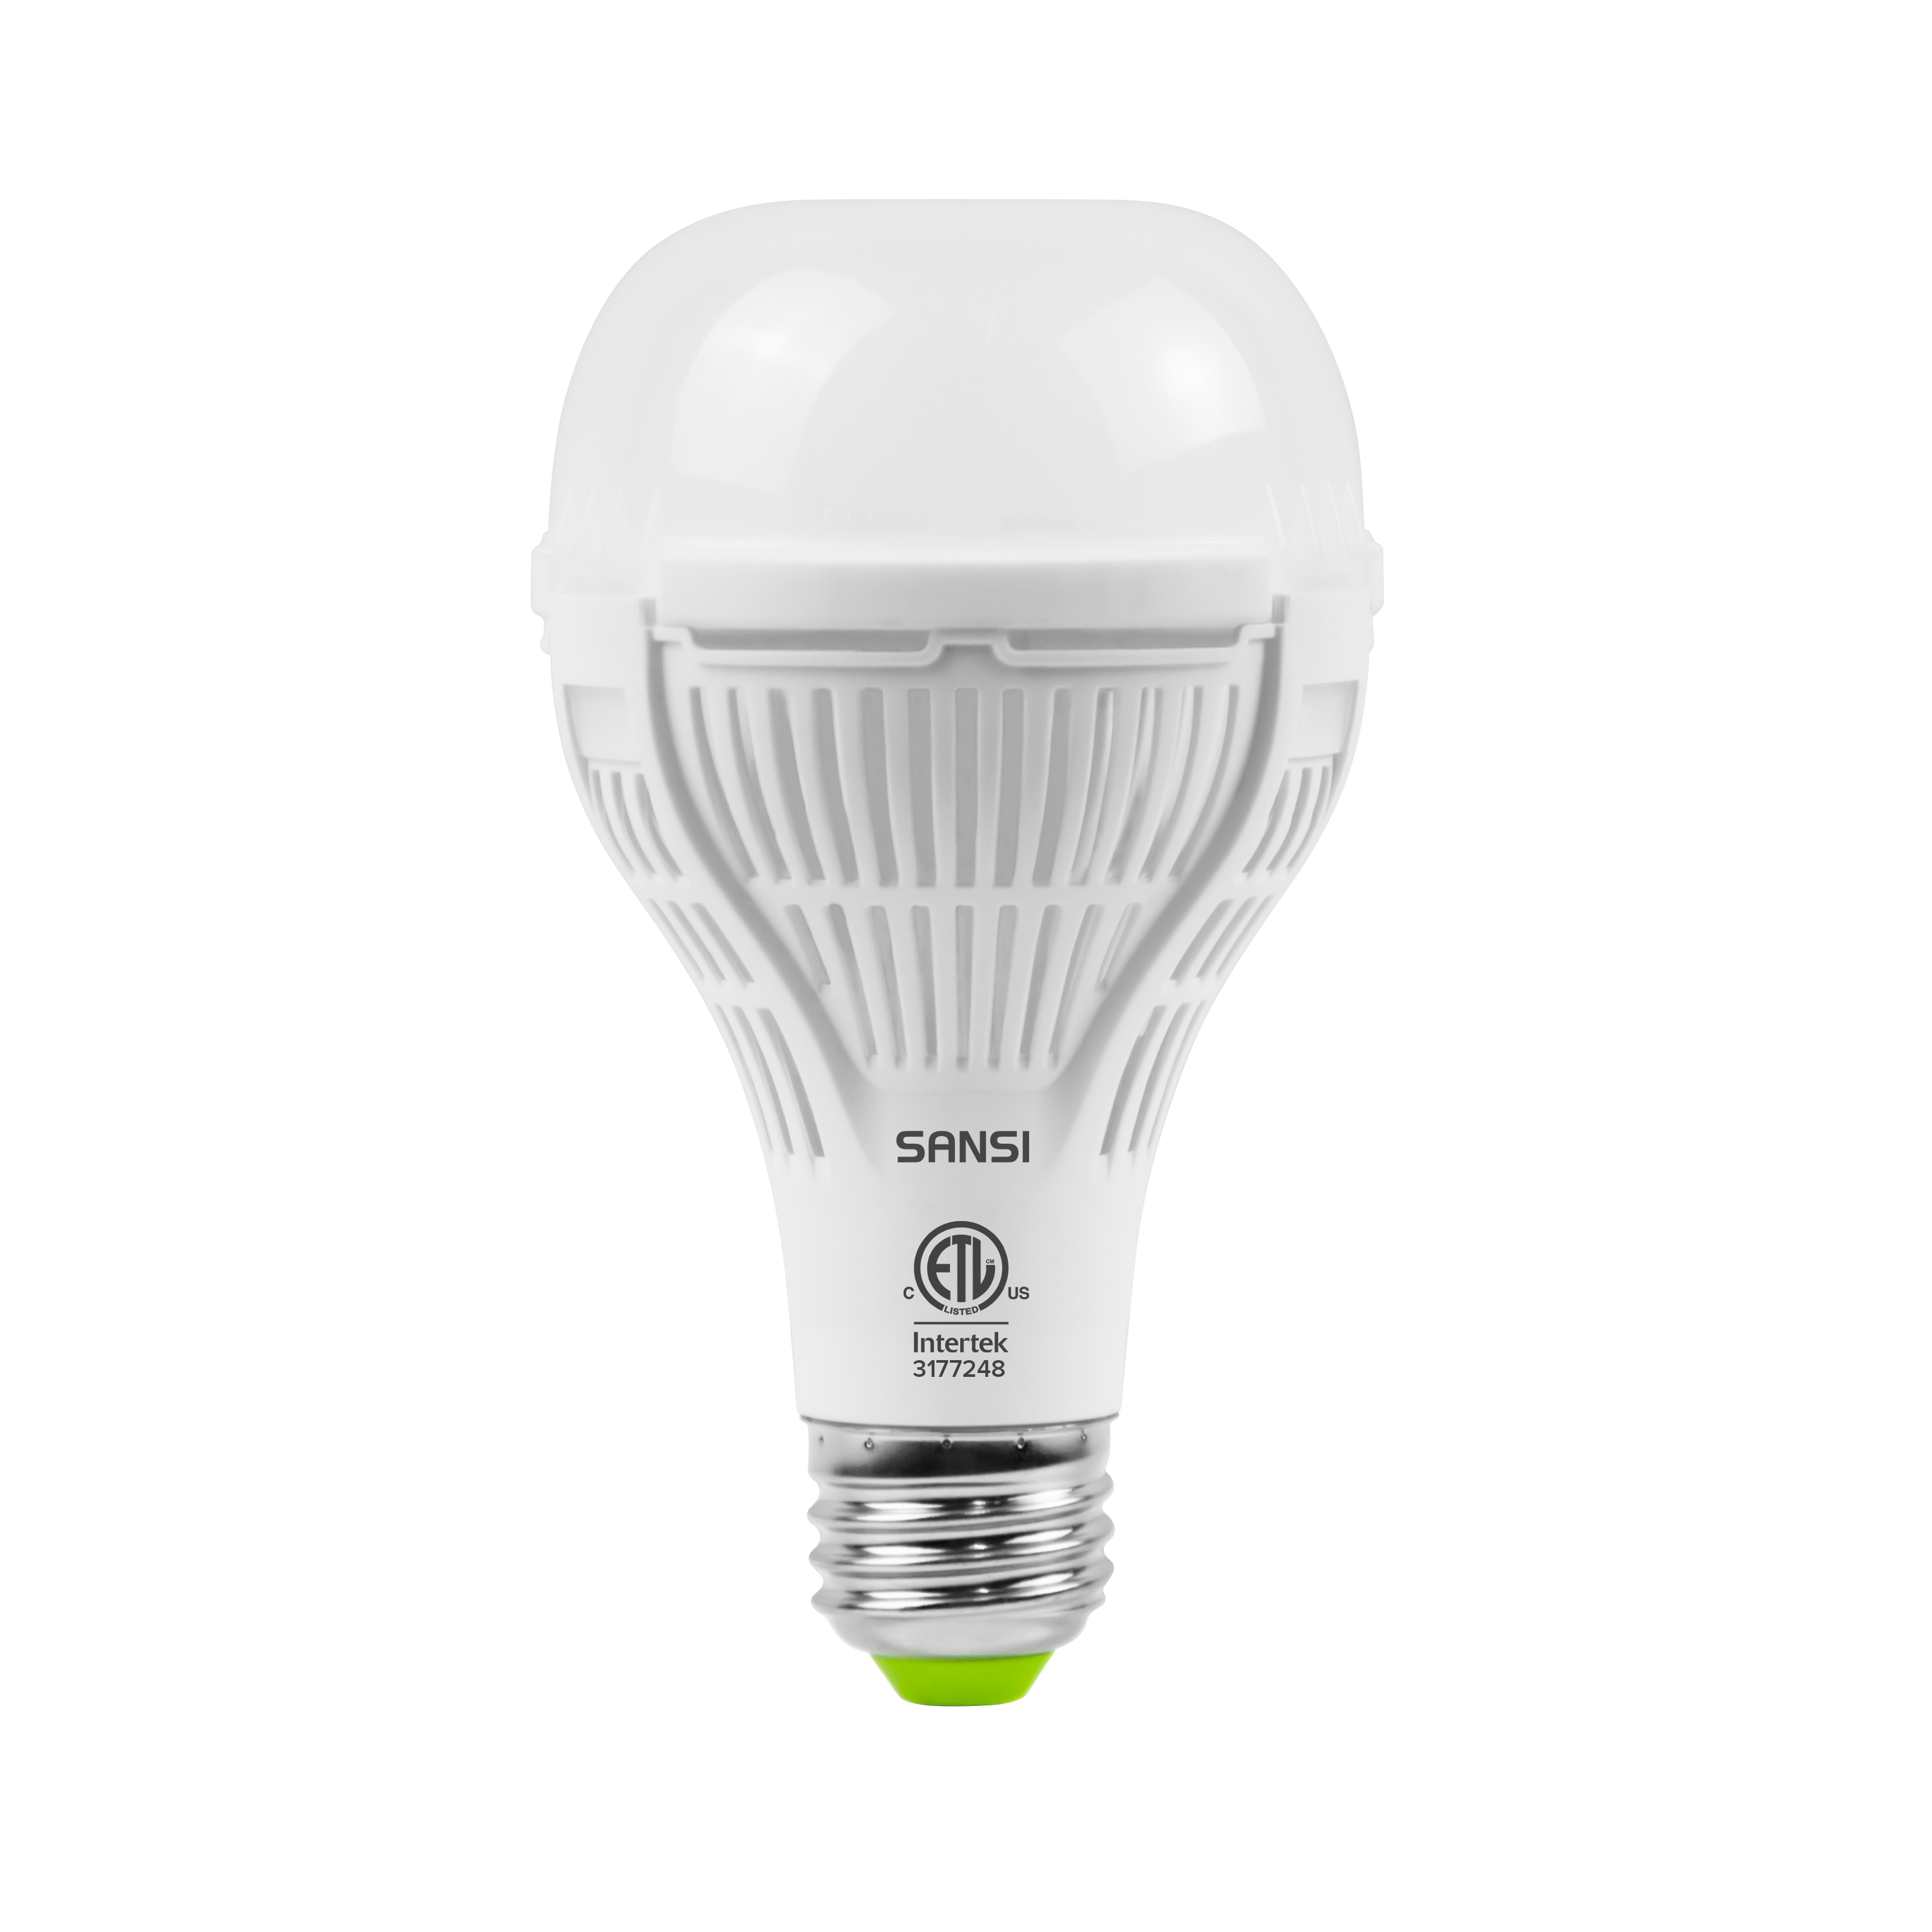 A21 15W LED Grow Light Bulb (US, EU ONLY)